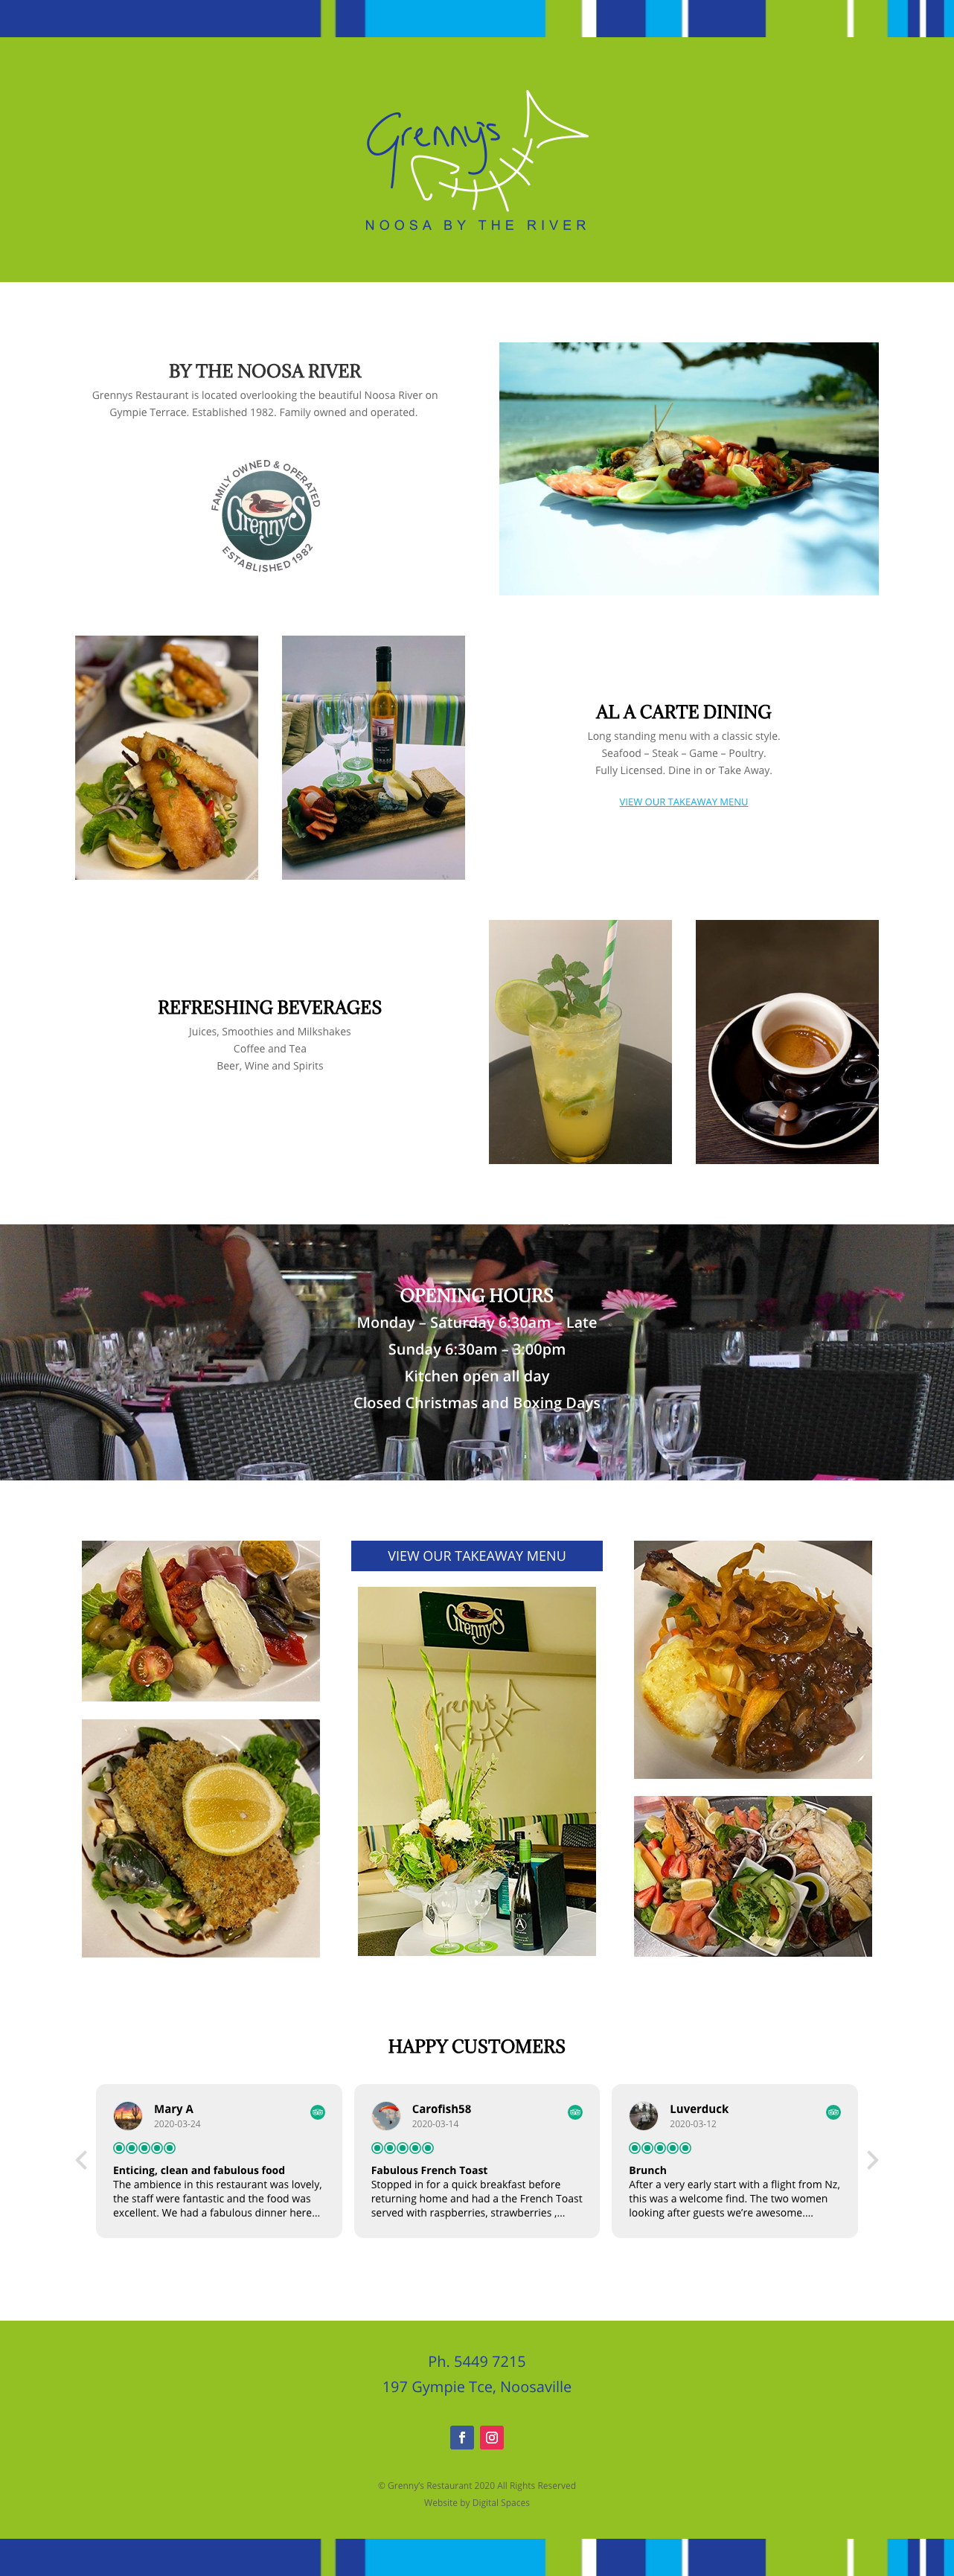 Grennys Restaurant website